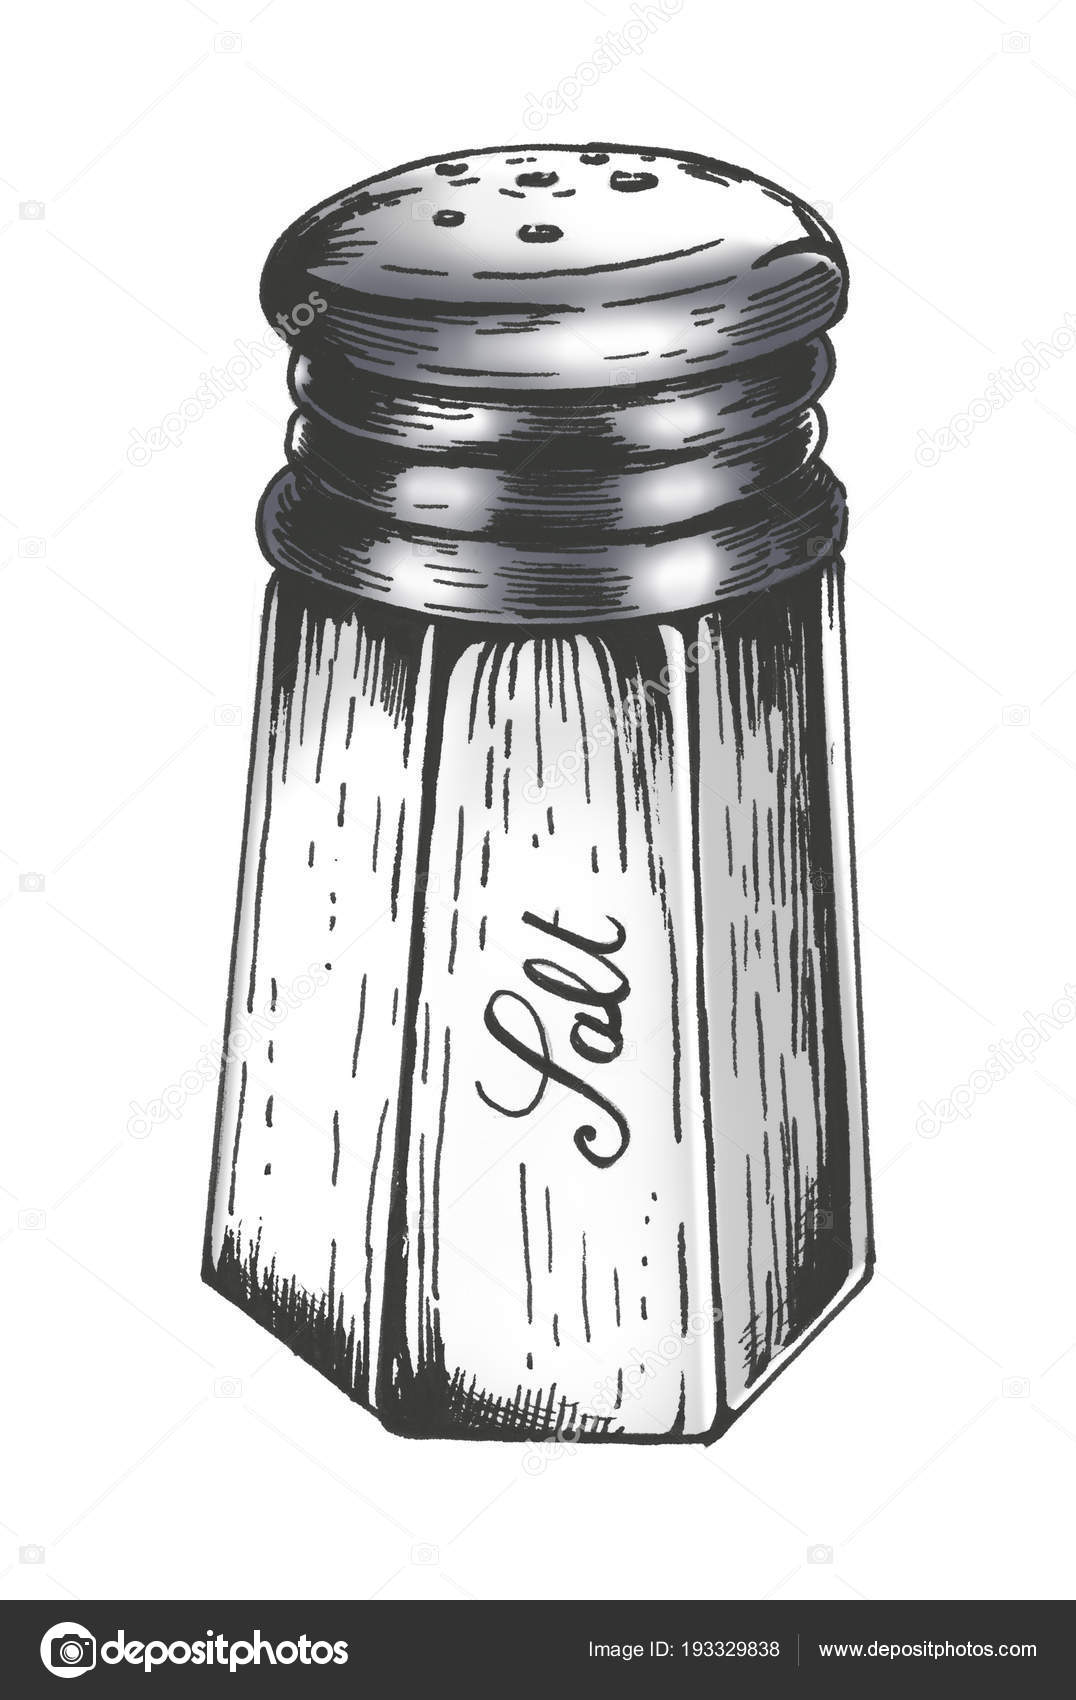 https://st3.depositphotos.com/3591429/19332/i/1600/depositphotos_193329838-stock-illustration-hand-drawn-salt-shaker.jpg